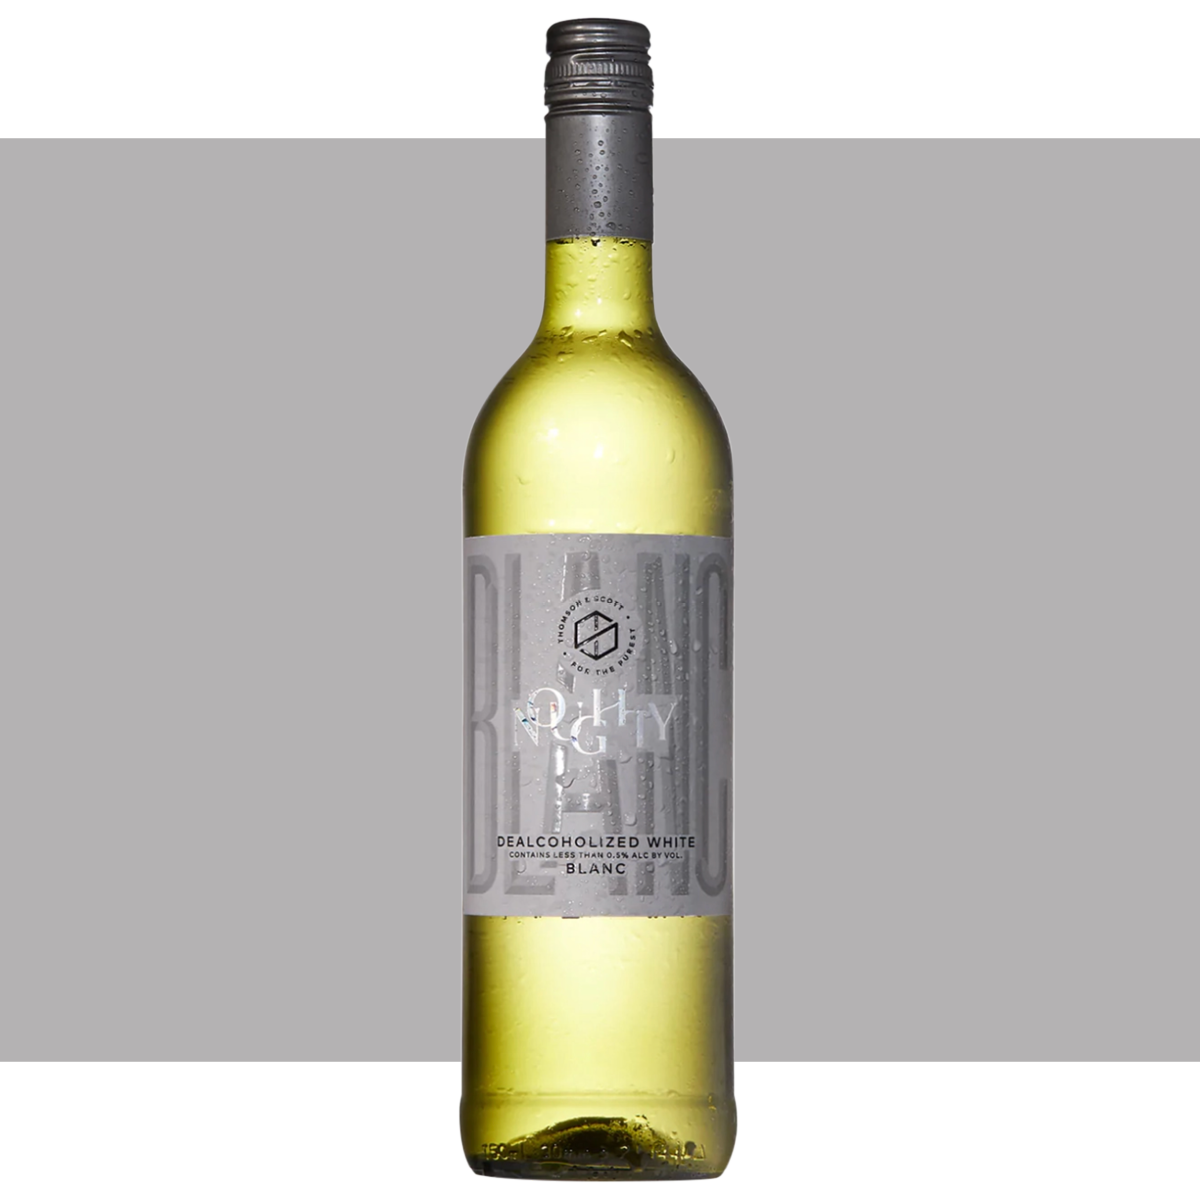 Thomson & Scott Noughty Blanc Non-Alcoholic White Wine